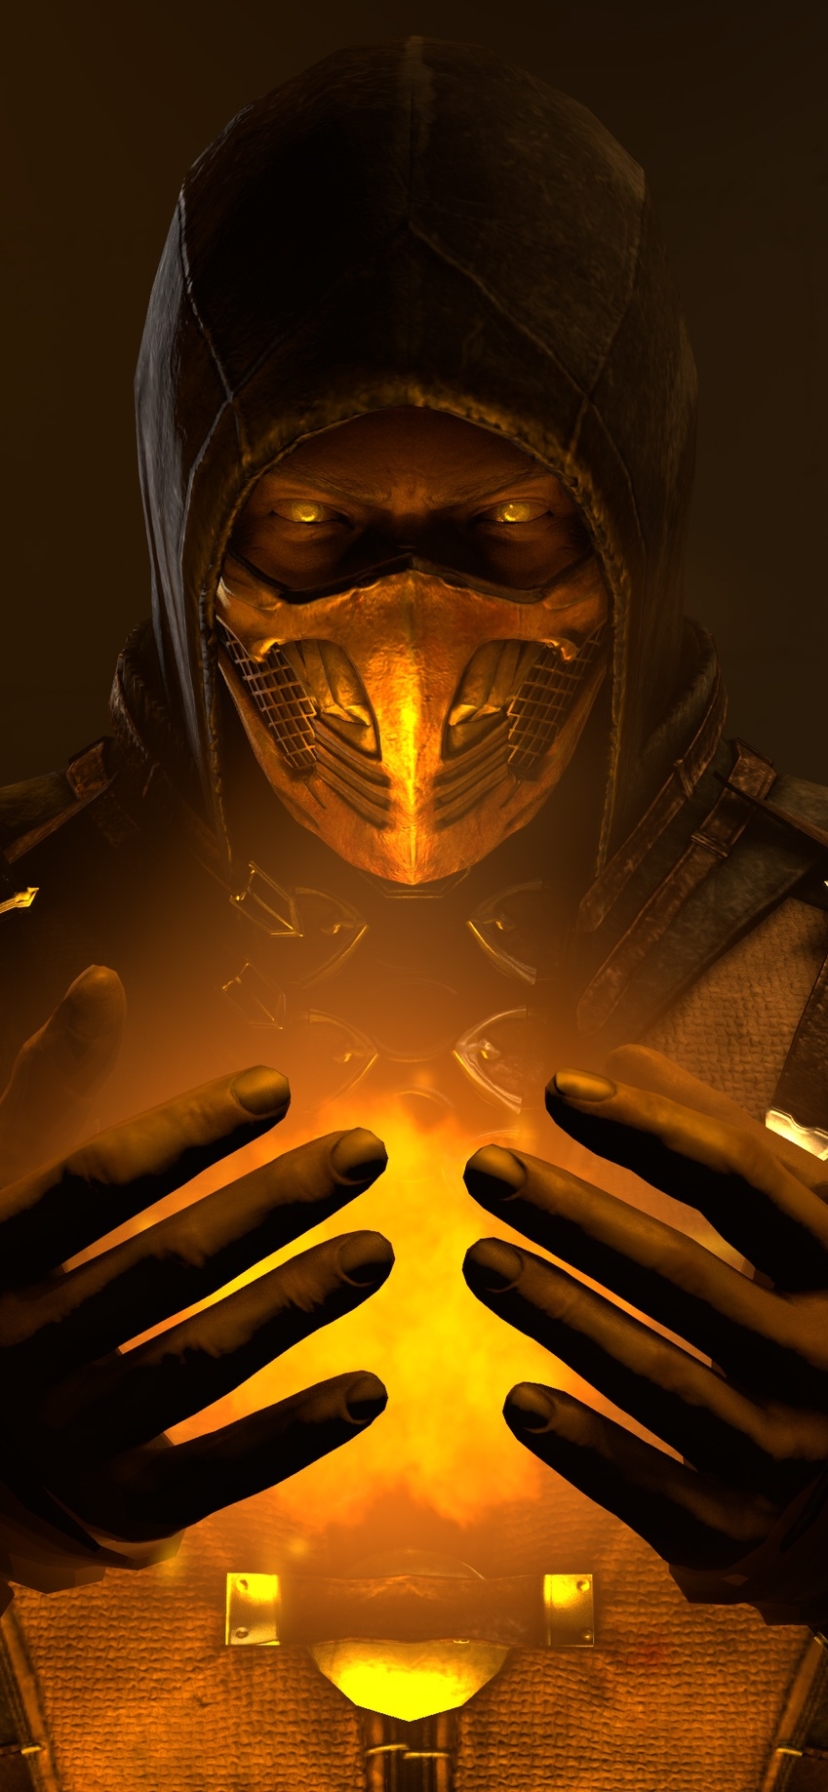 Descarga gratuita de fondo de pantalla para móvil de Mortal Kombat, Videojuego, Escorpión (Mortal Kombat), Mortal Kombat X.